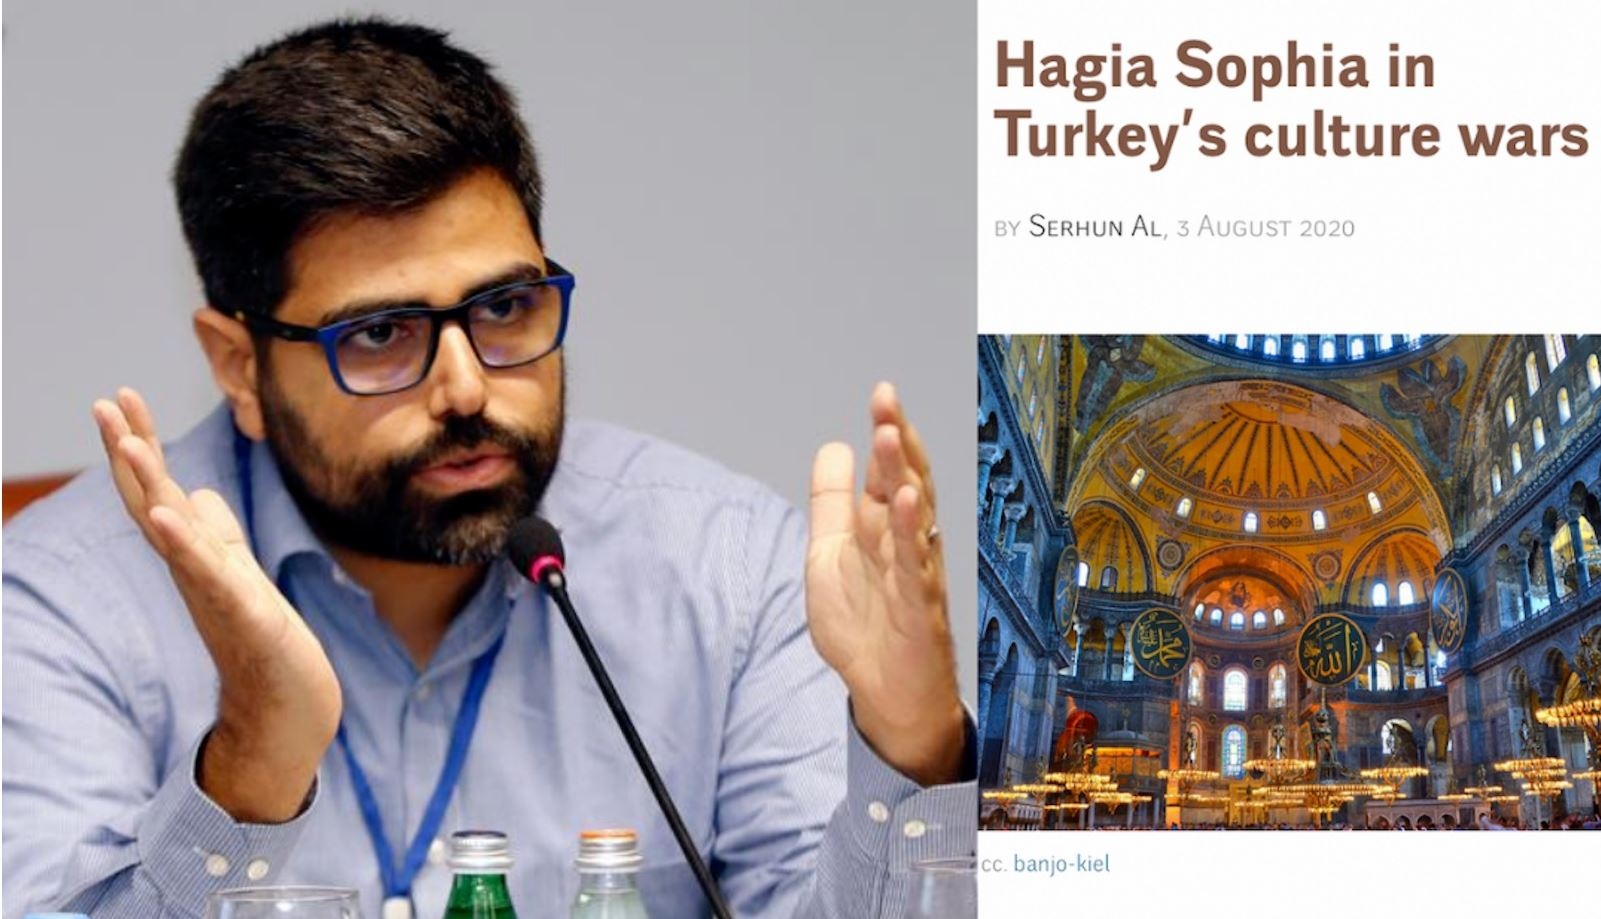 Serhun Al ‘Le Monde Diplomatique’ için yazdı: “Hagia Sophia in Turkey’s culture wars”